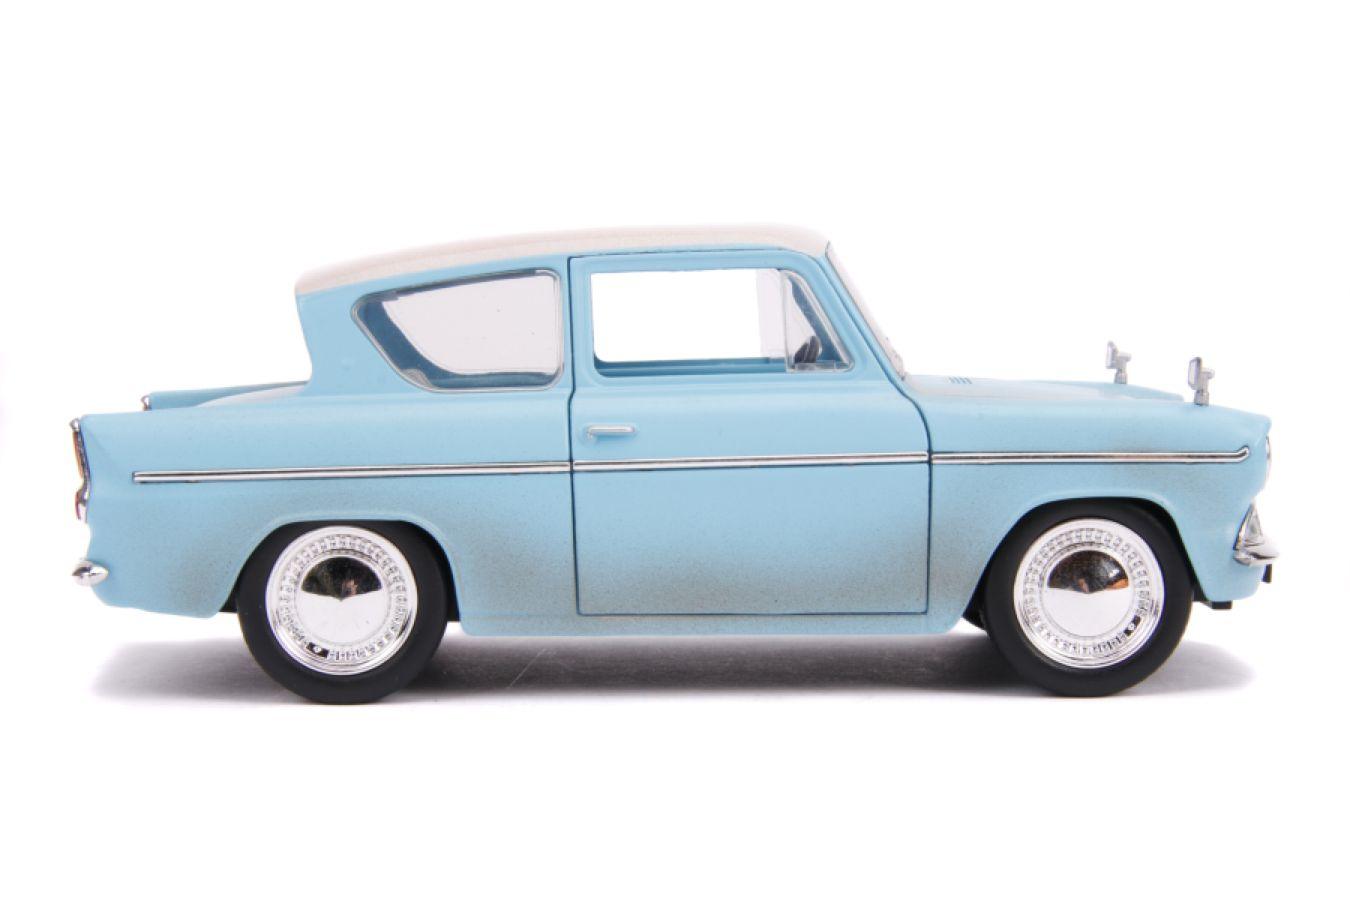 JAD31127 Harry Potter - 1959 Ford Anglia 1:24 Hollywood Ride Diecast Vehicle - Jada Toys - Titan Pop Culture